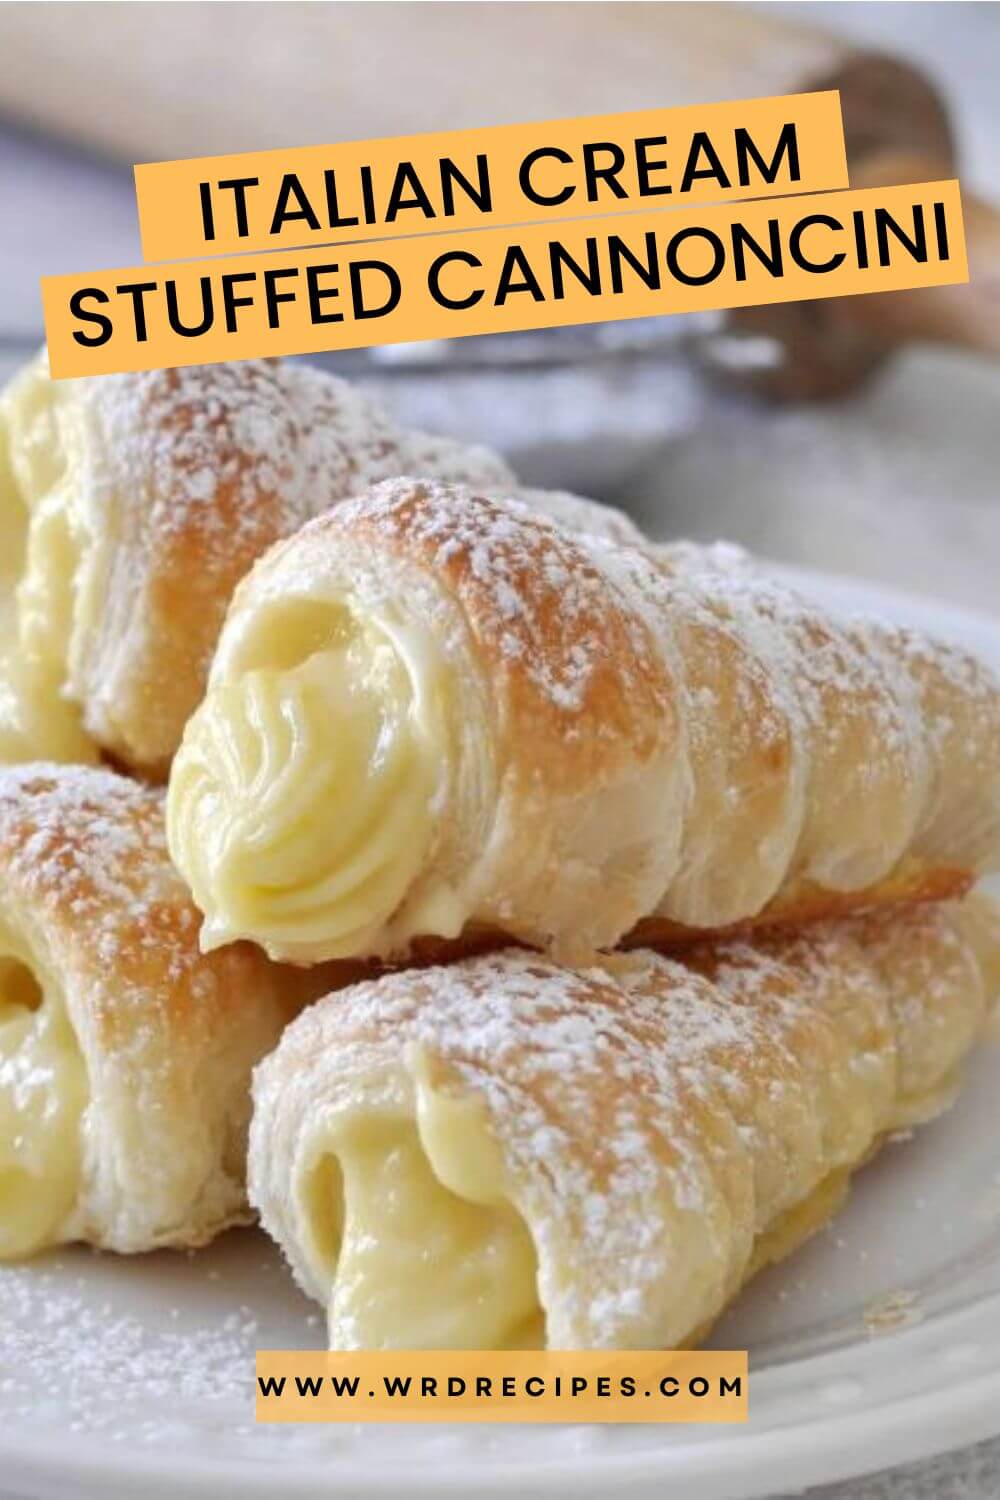 Italian Cream Stuffed Cannoncini Recipe Step-by-step